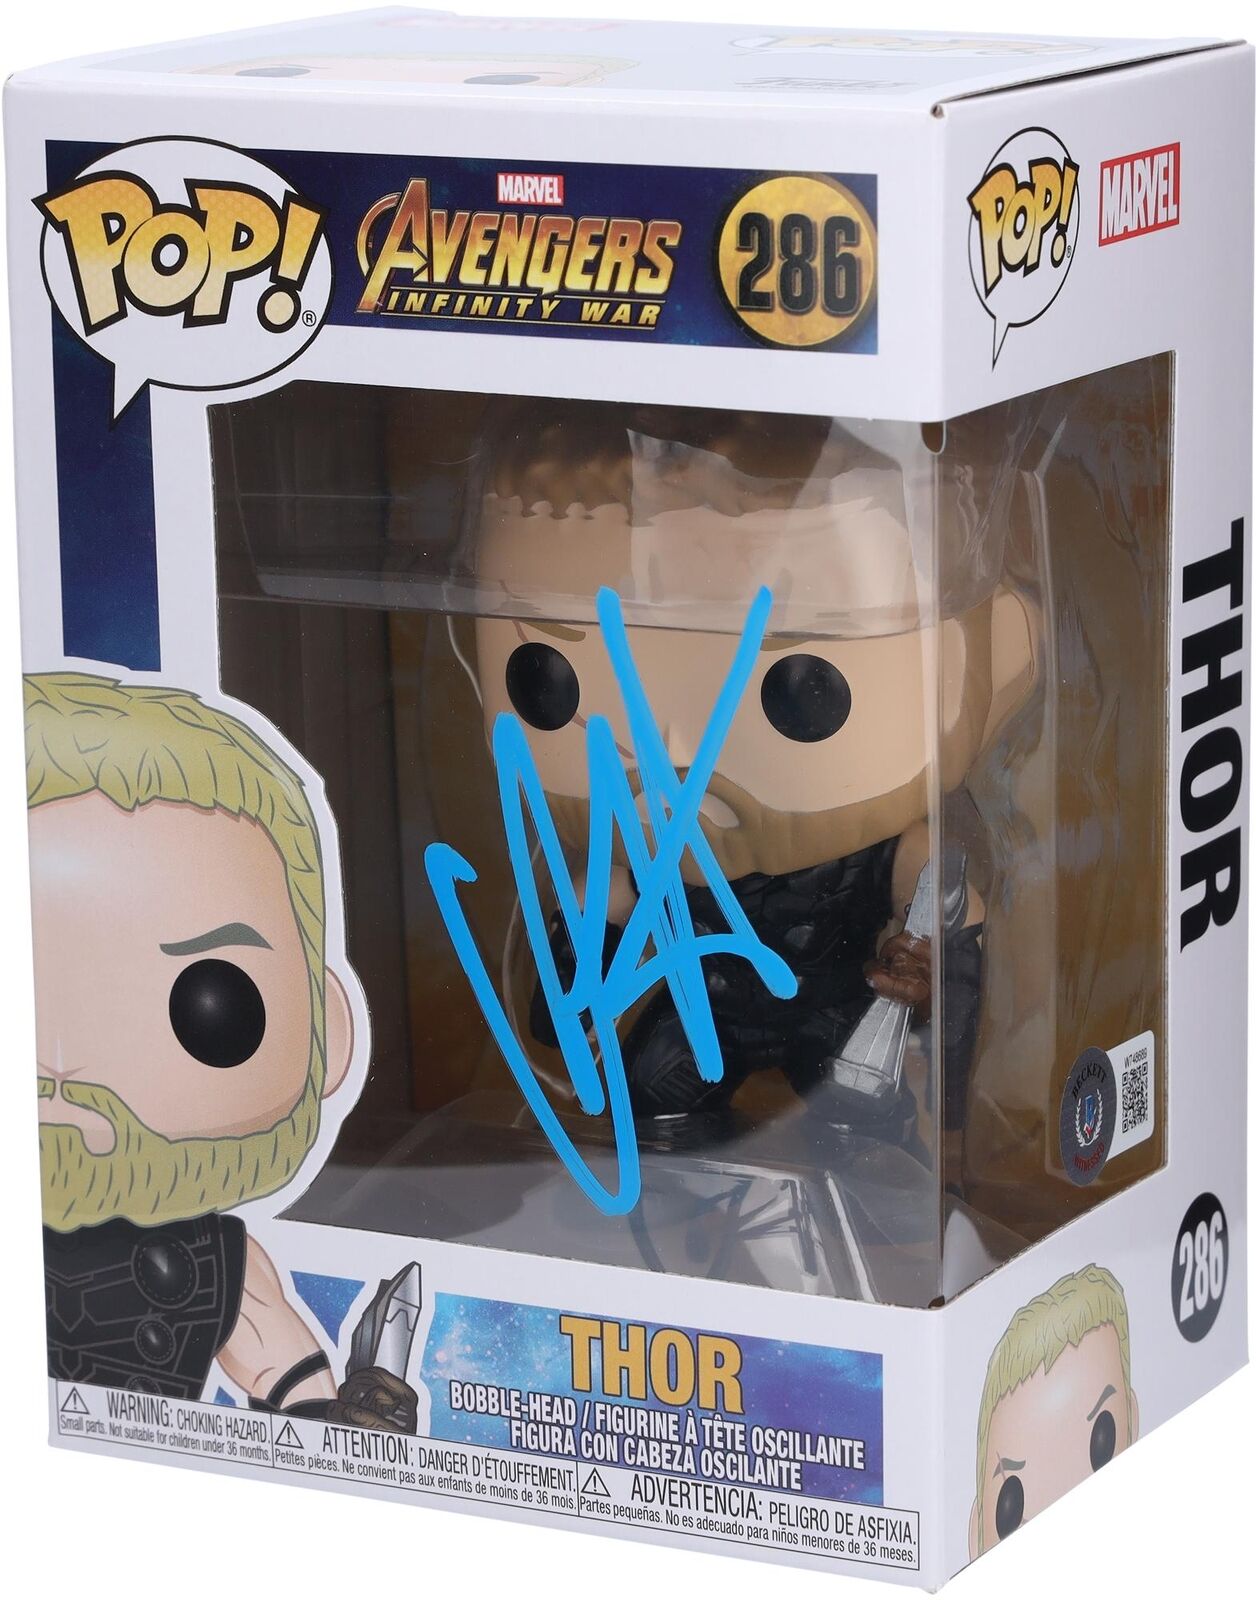 Chris Hemsworth Thor Figurine Item#13150128